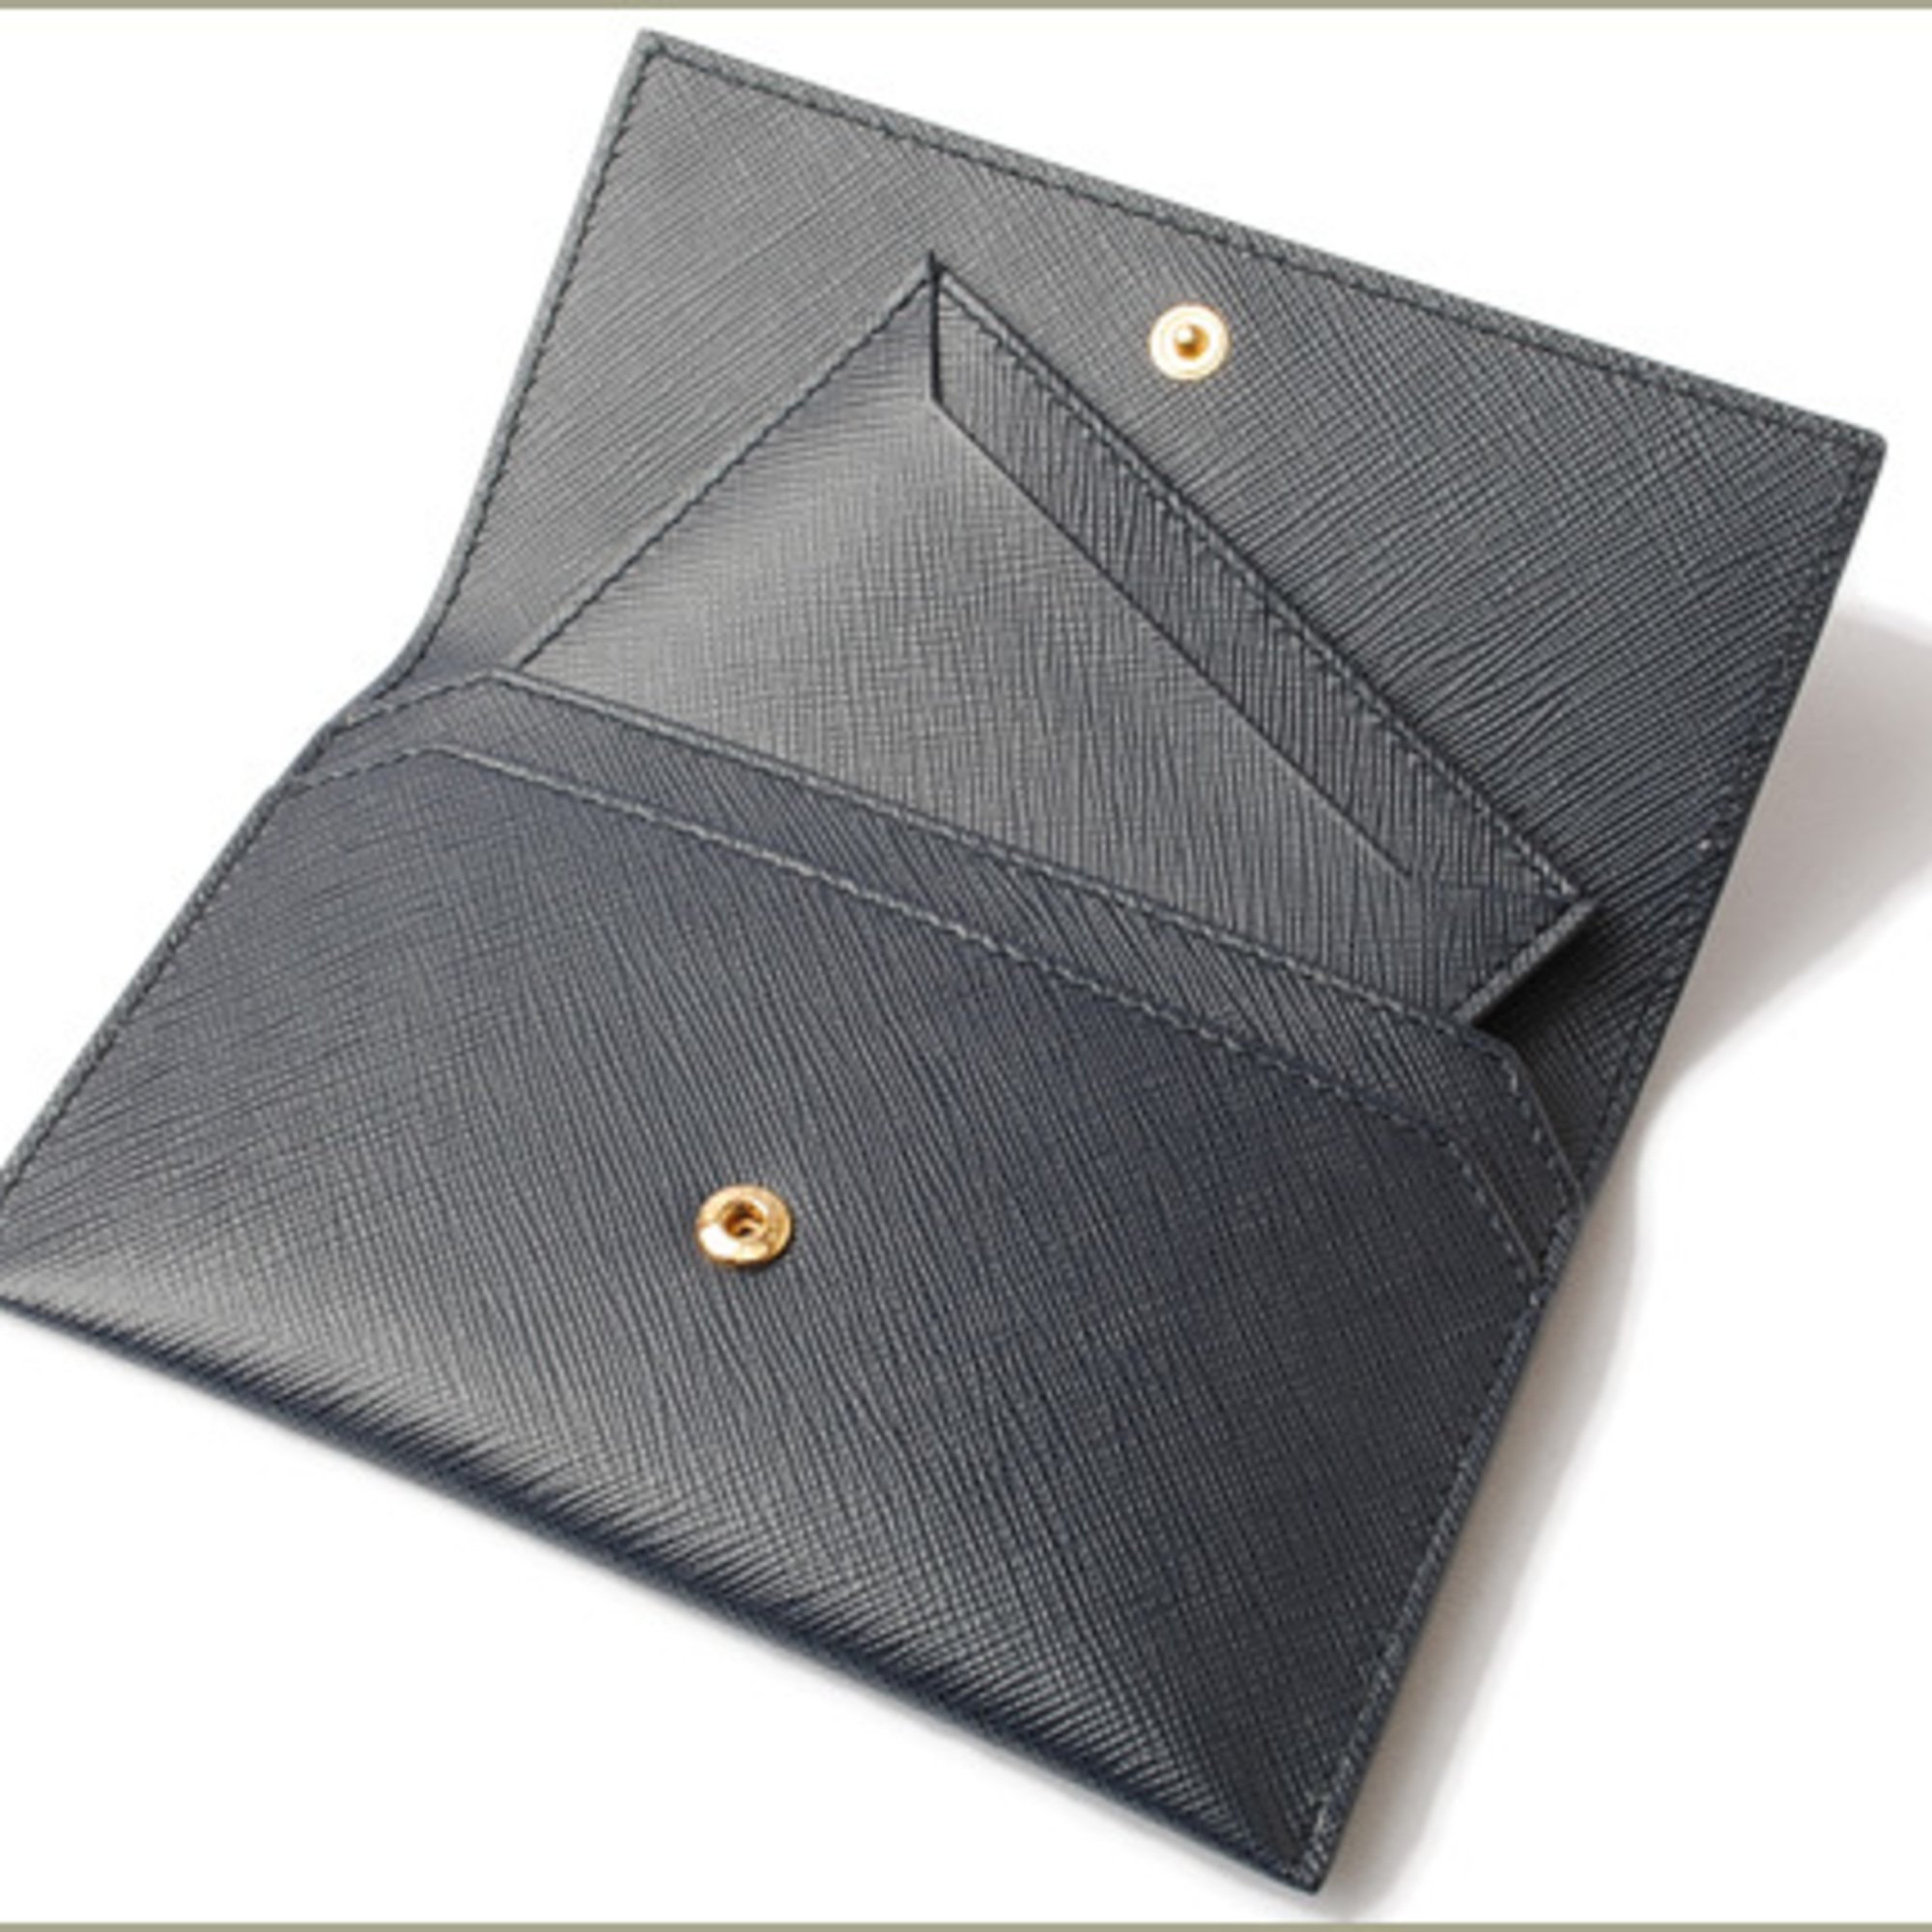 Prada card case folded wallet PRADA 1MC004 SAFFIANO GRECHE embossed leather BALTICO ROSSO navy red